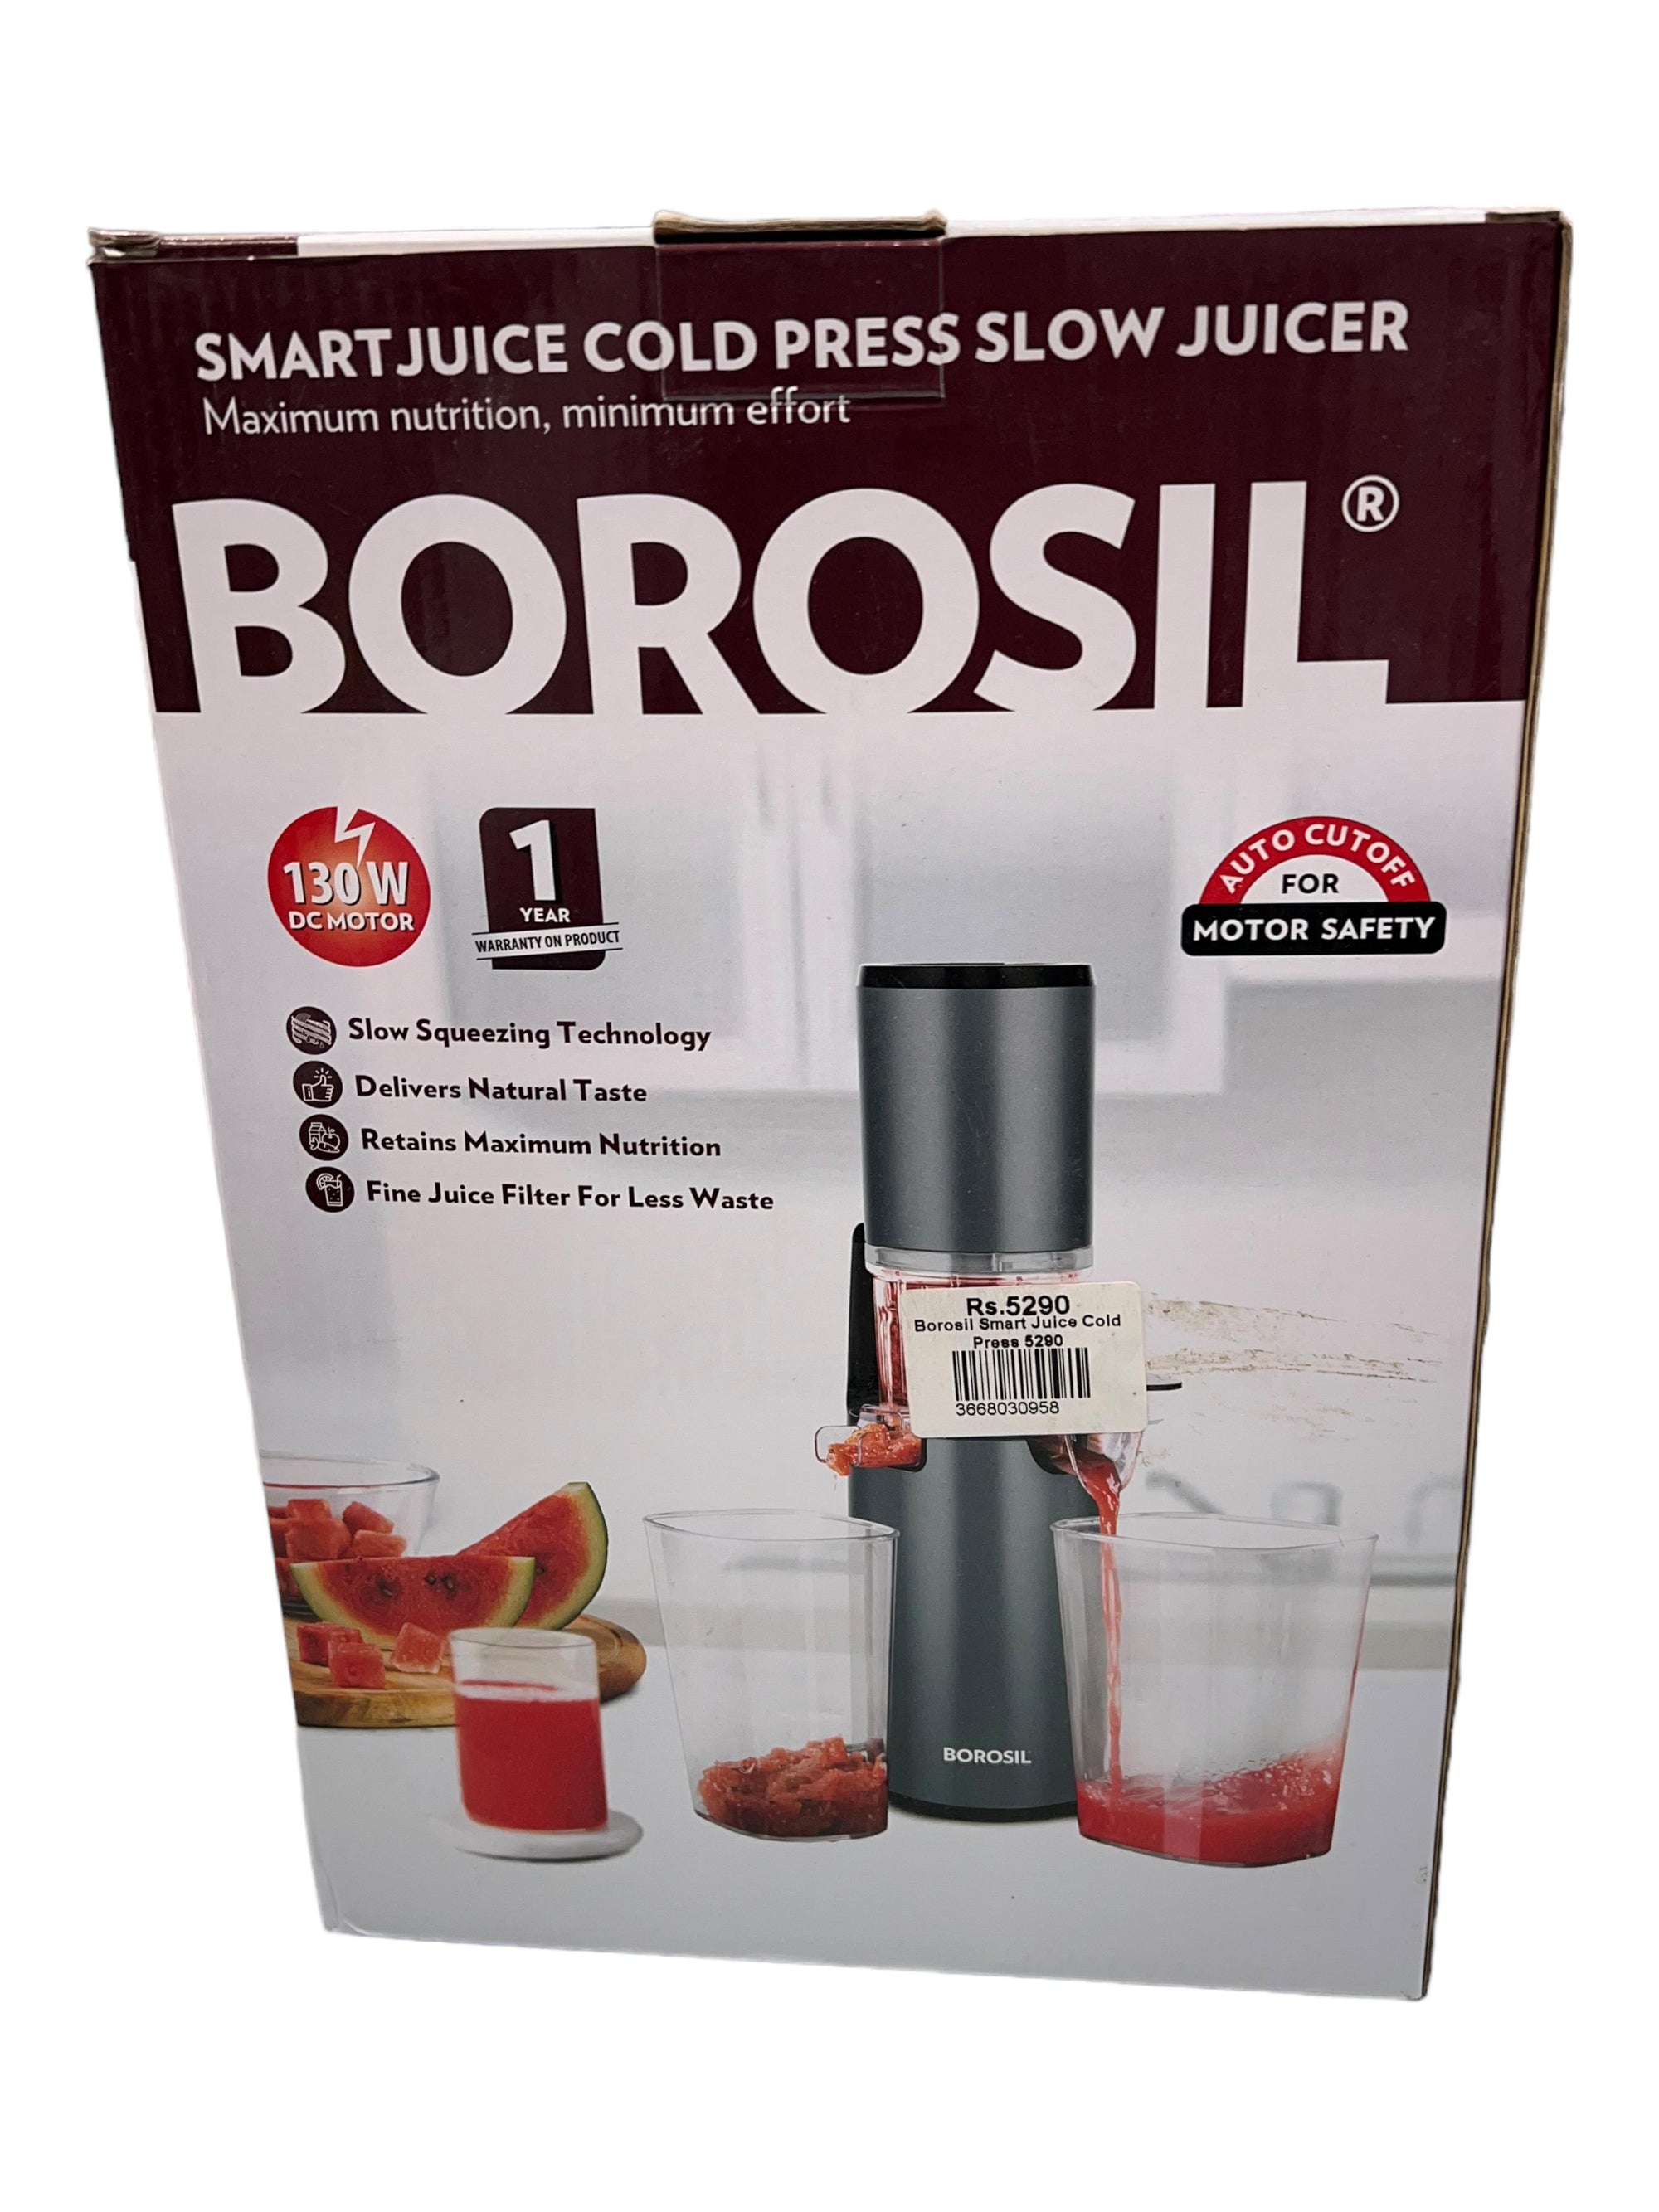 Borosil Smart Juice Cold Press Slow Juicer - 130W DC Motor, 1 Year Warranty